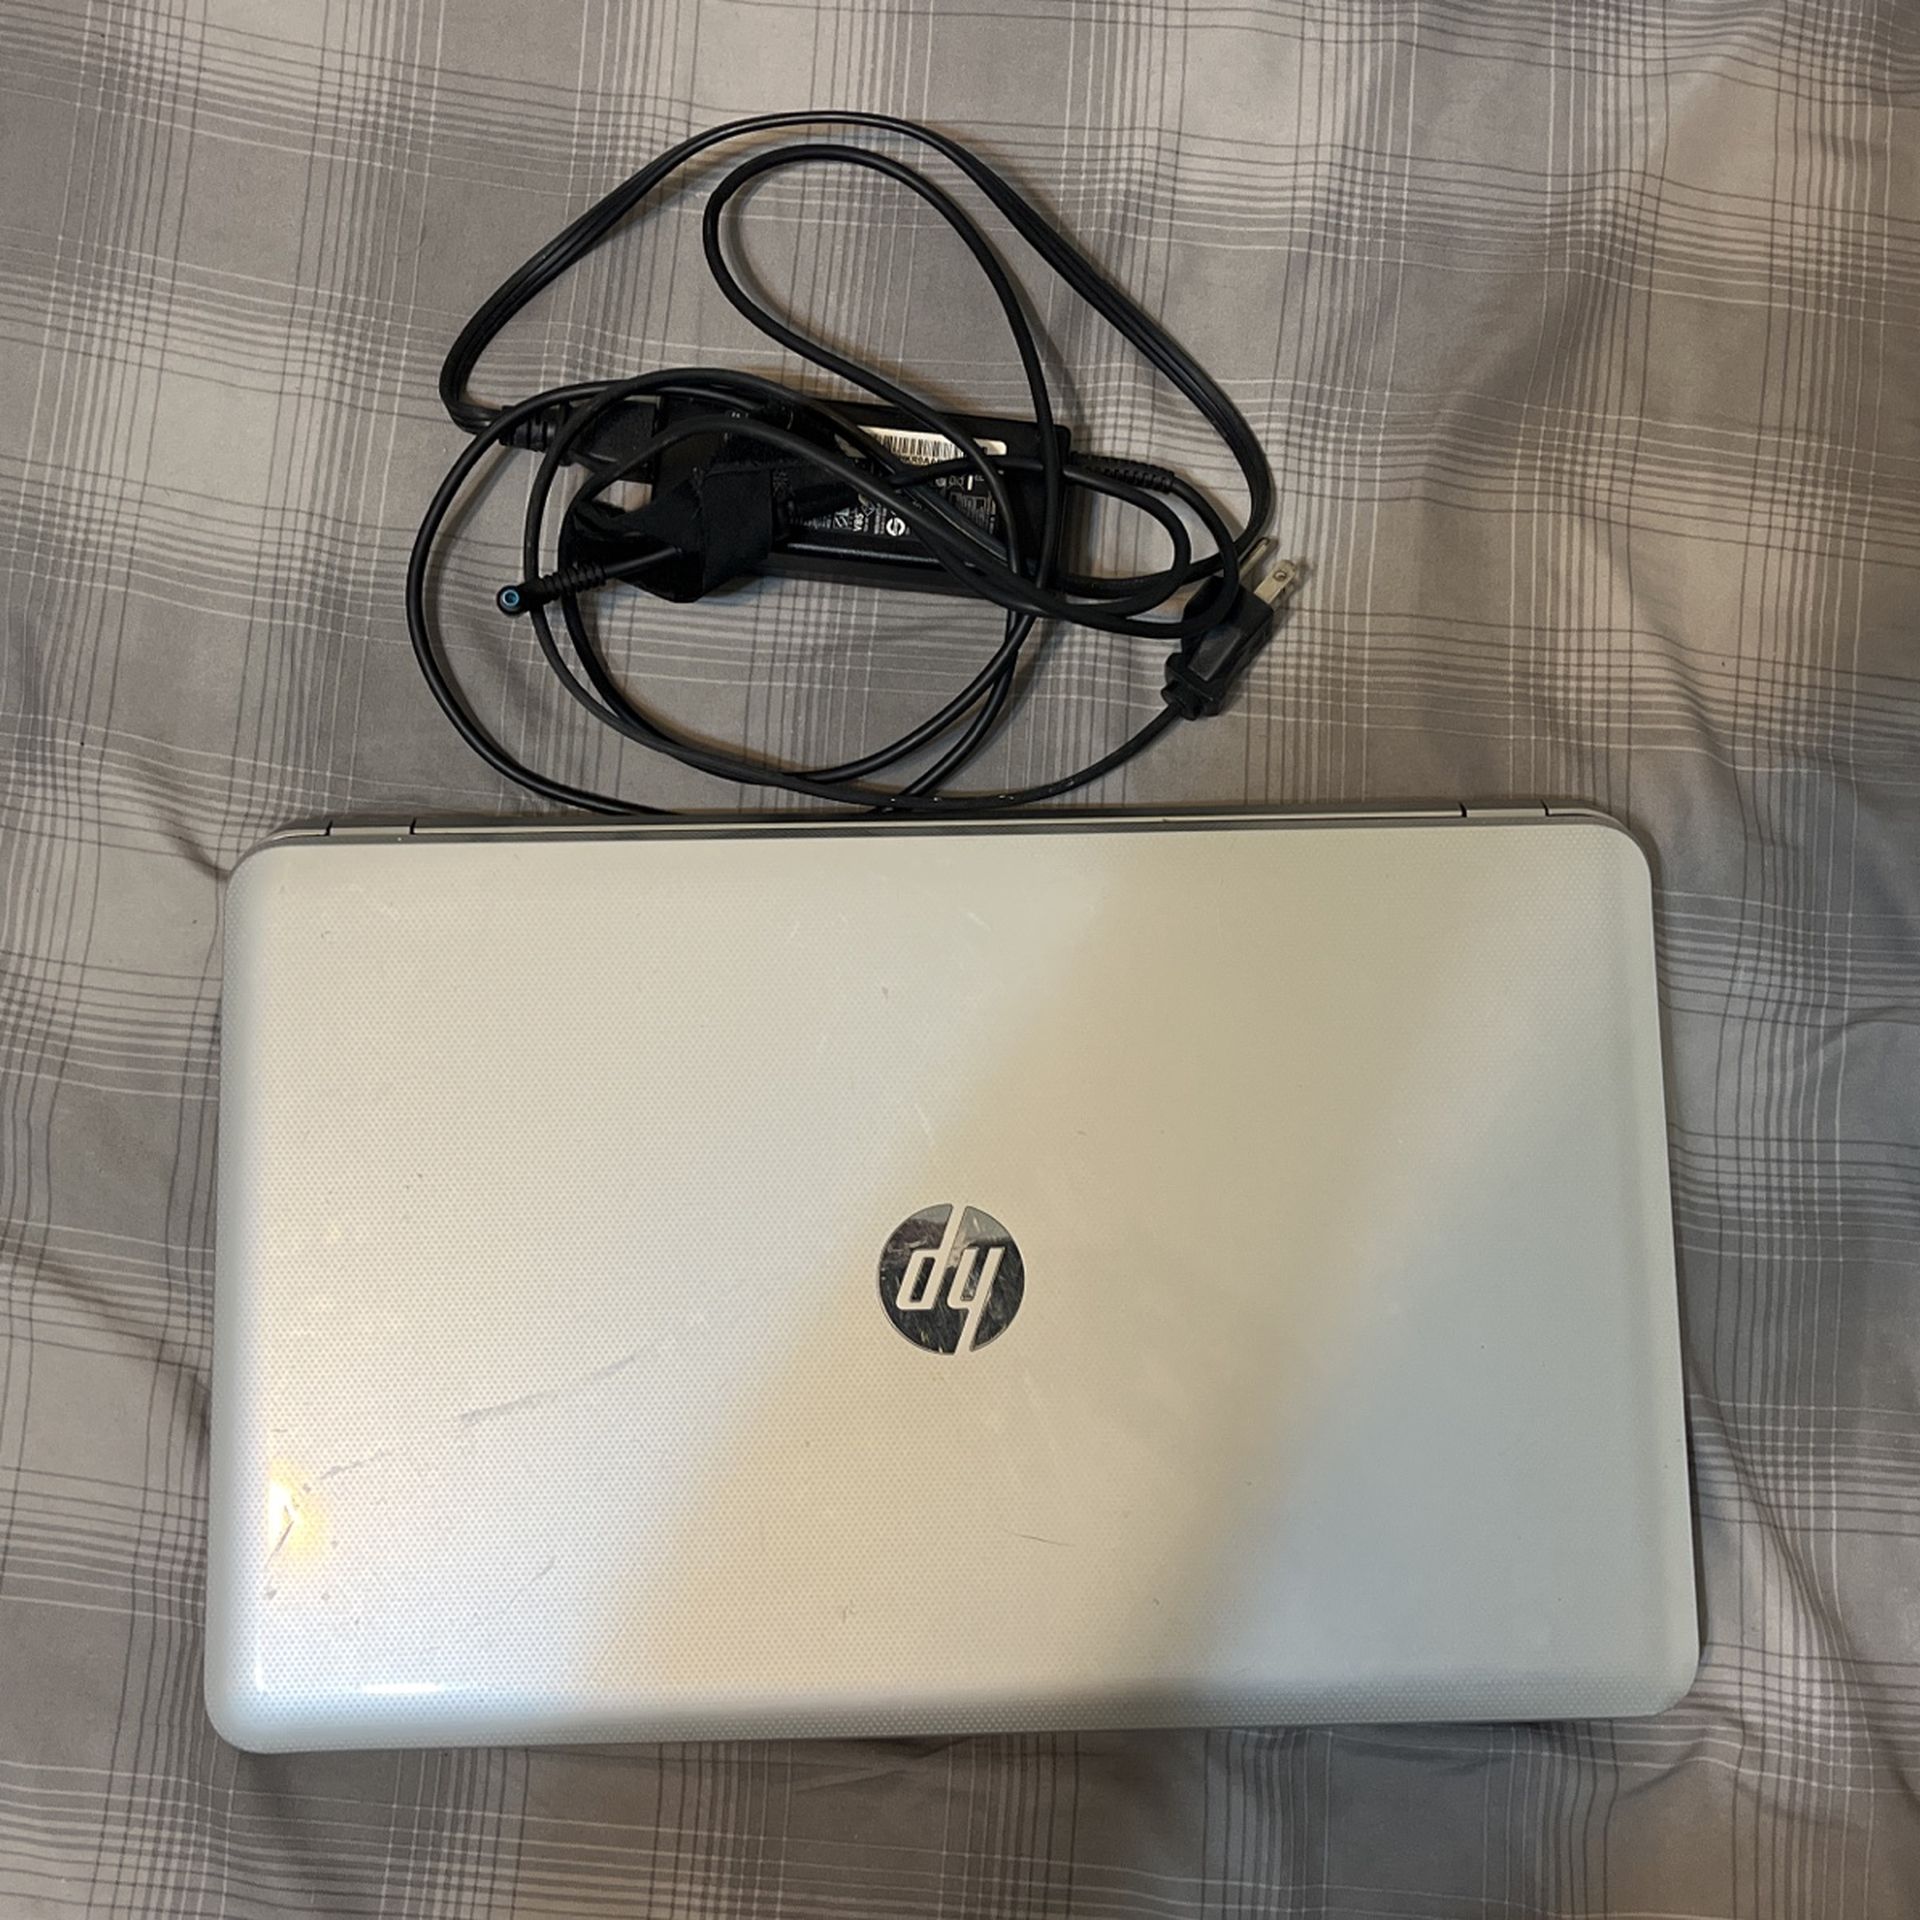 HP Pavilion 17 Notebook PC